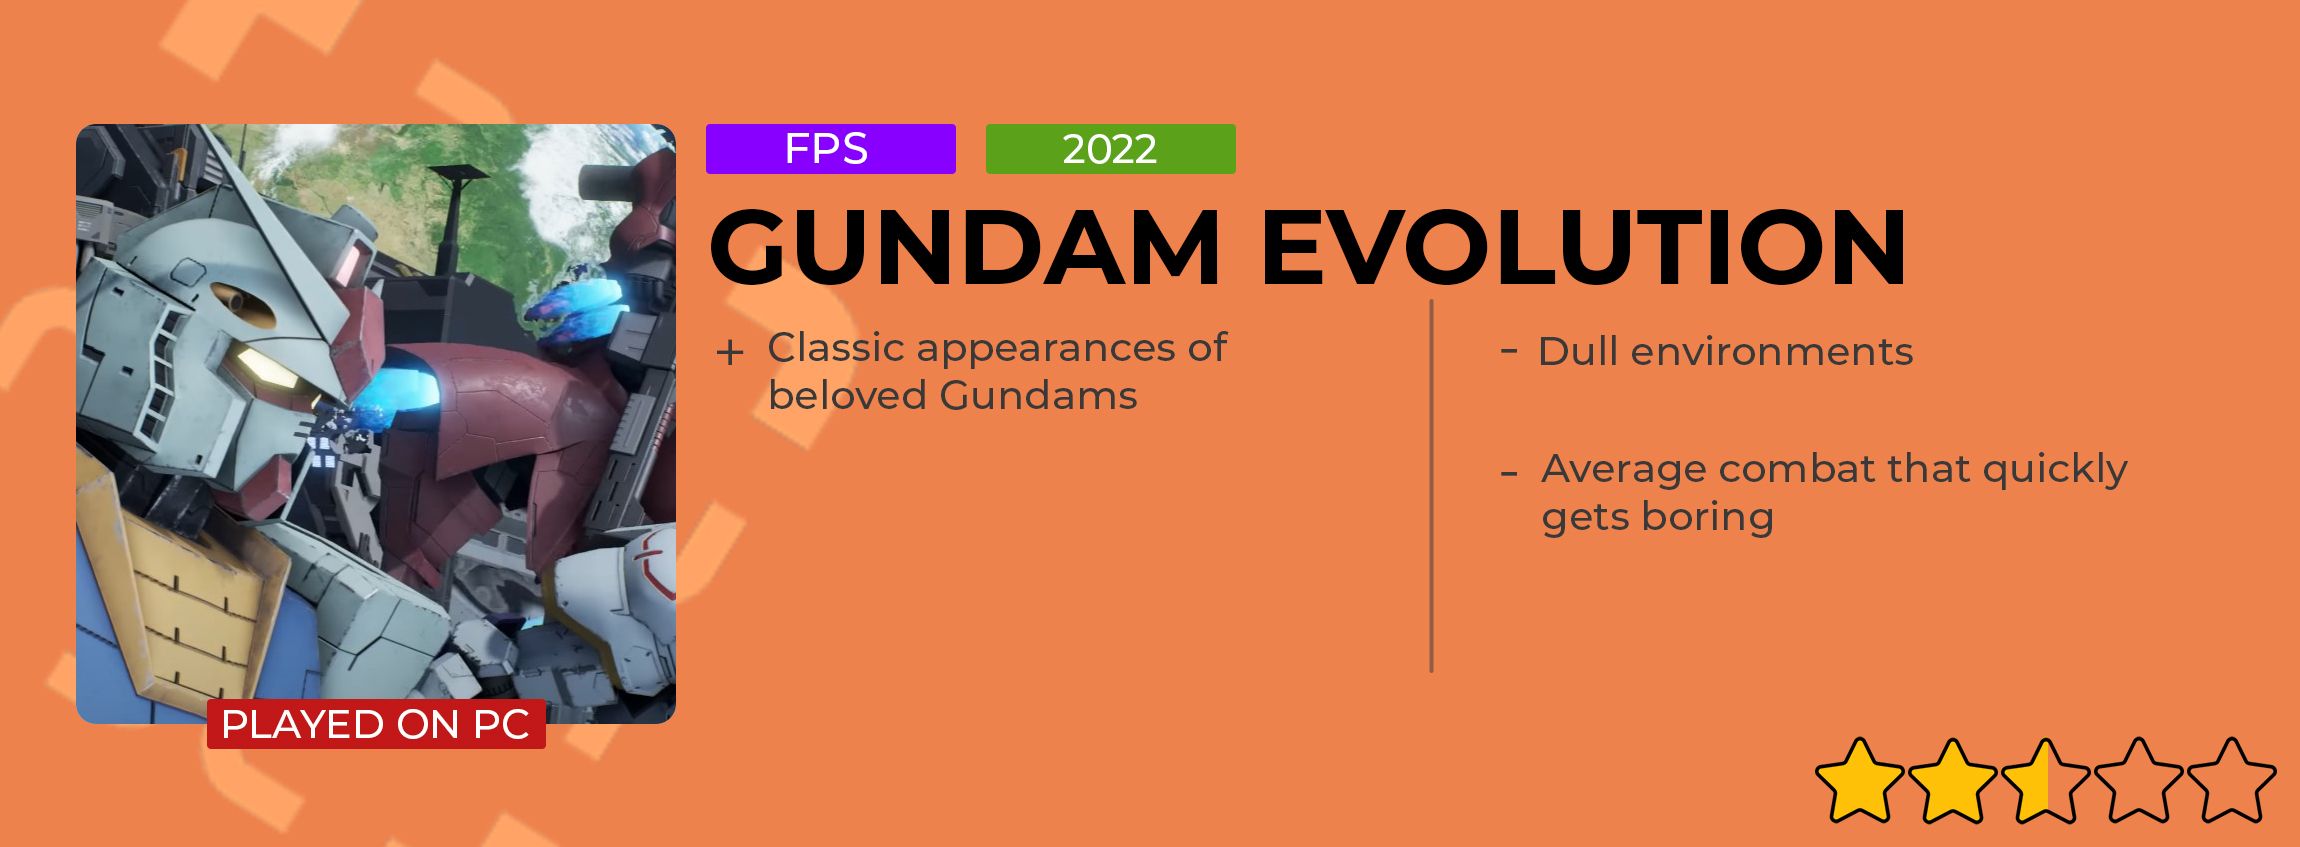 Gundam review card